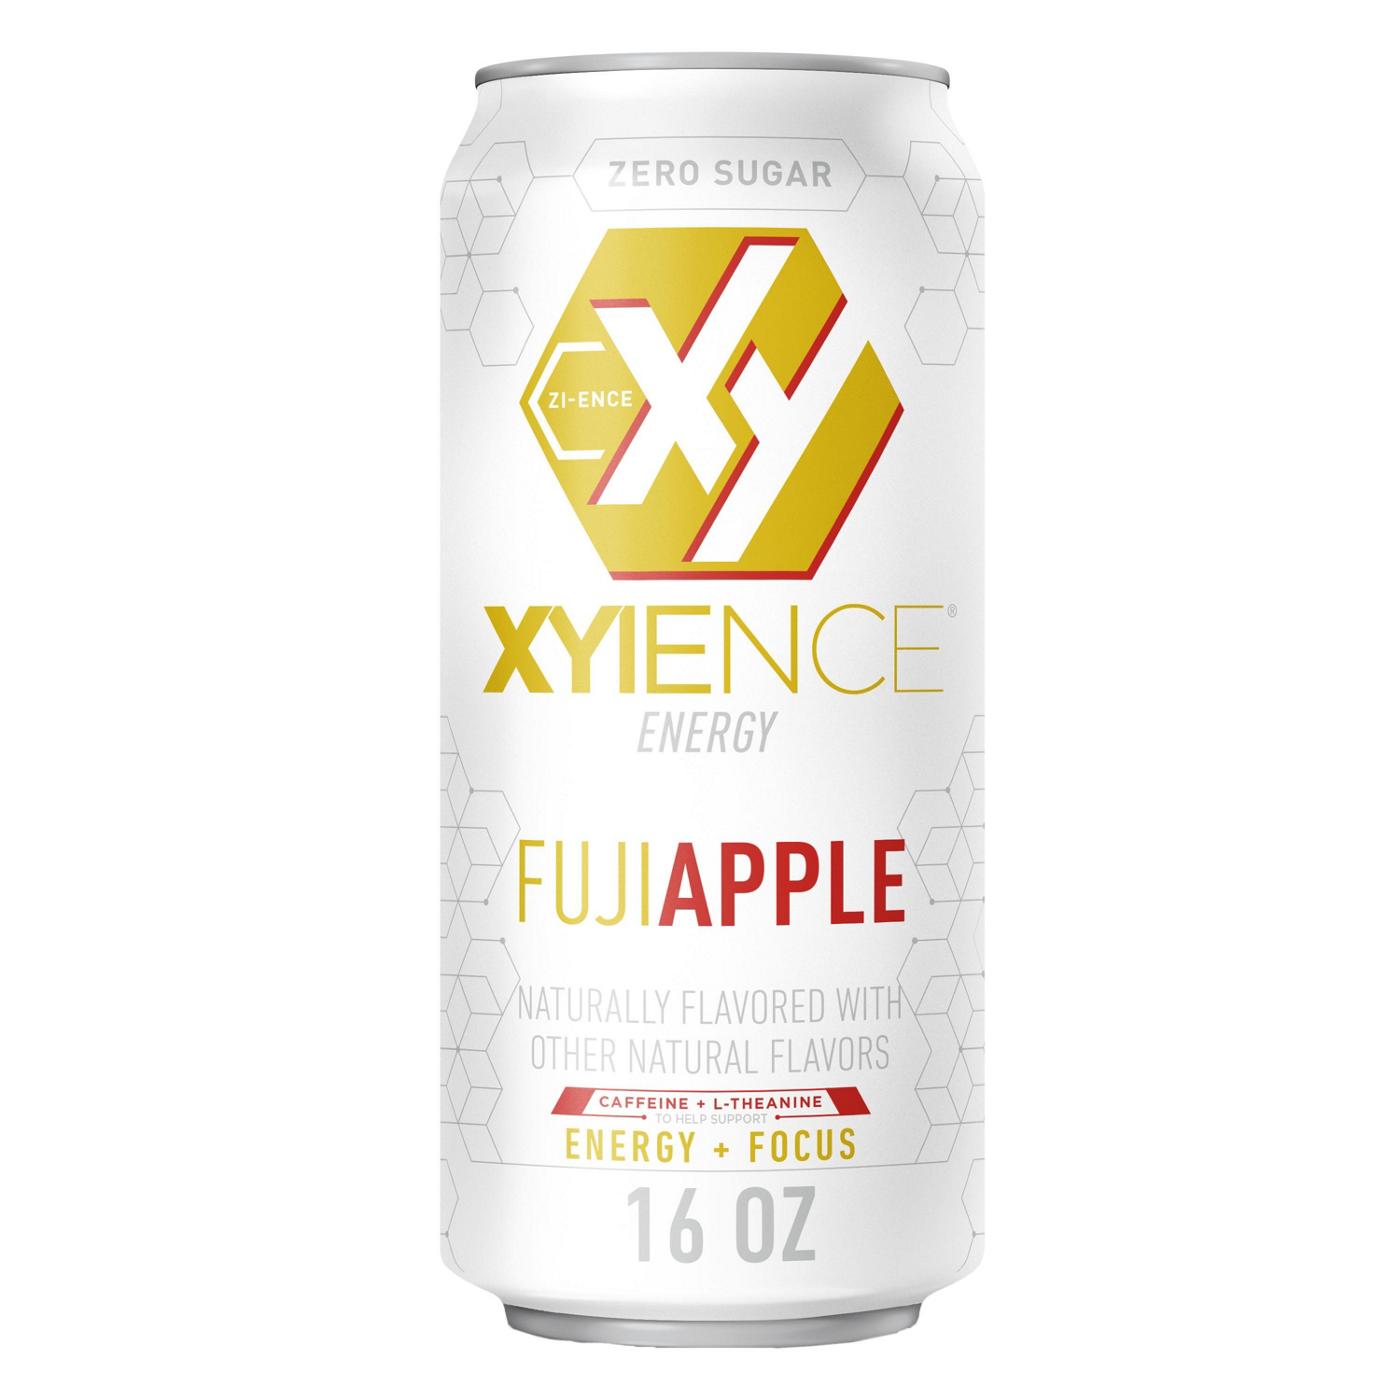 XYIENCE Zero Sugar Energy Drink - Fuji Apple; image 1 of 6